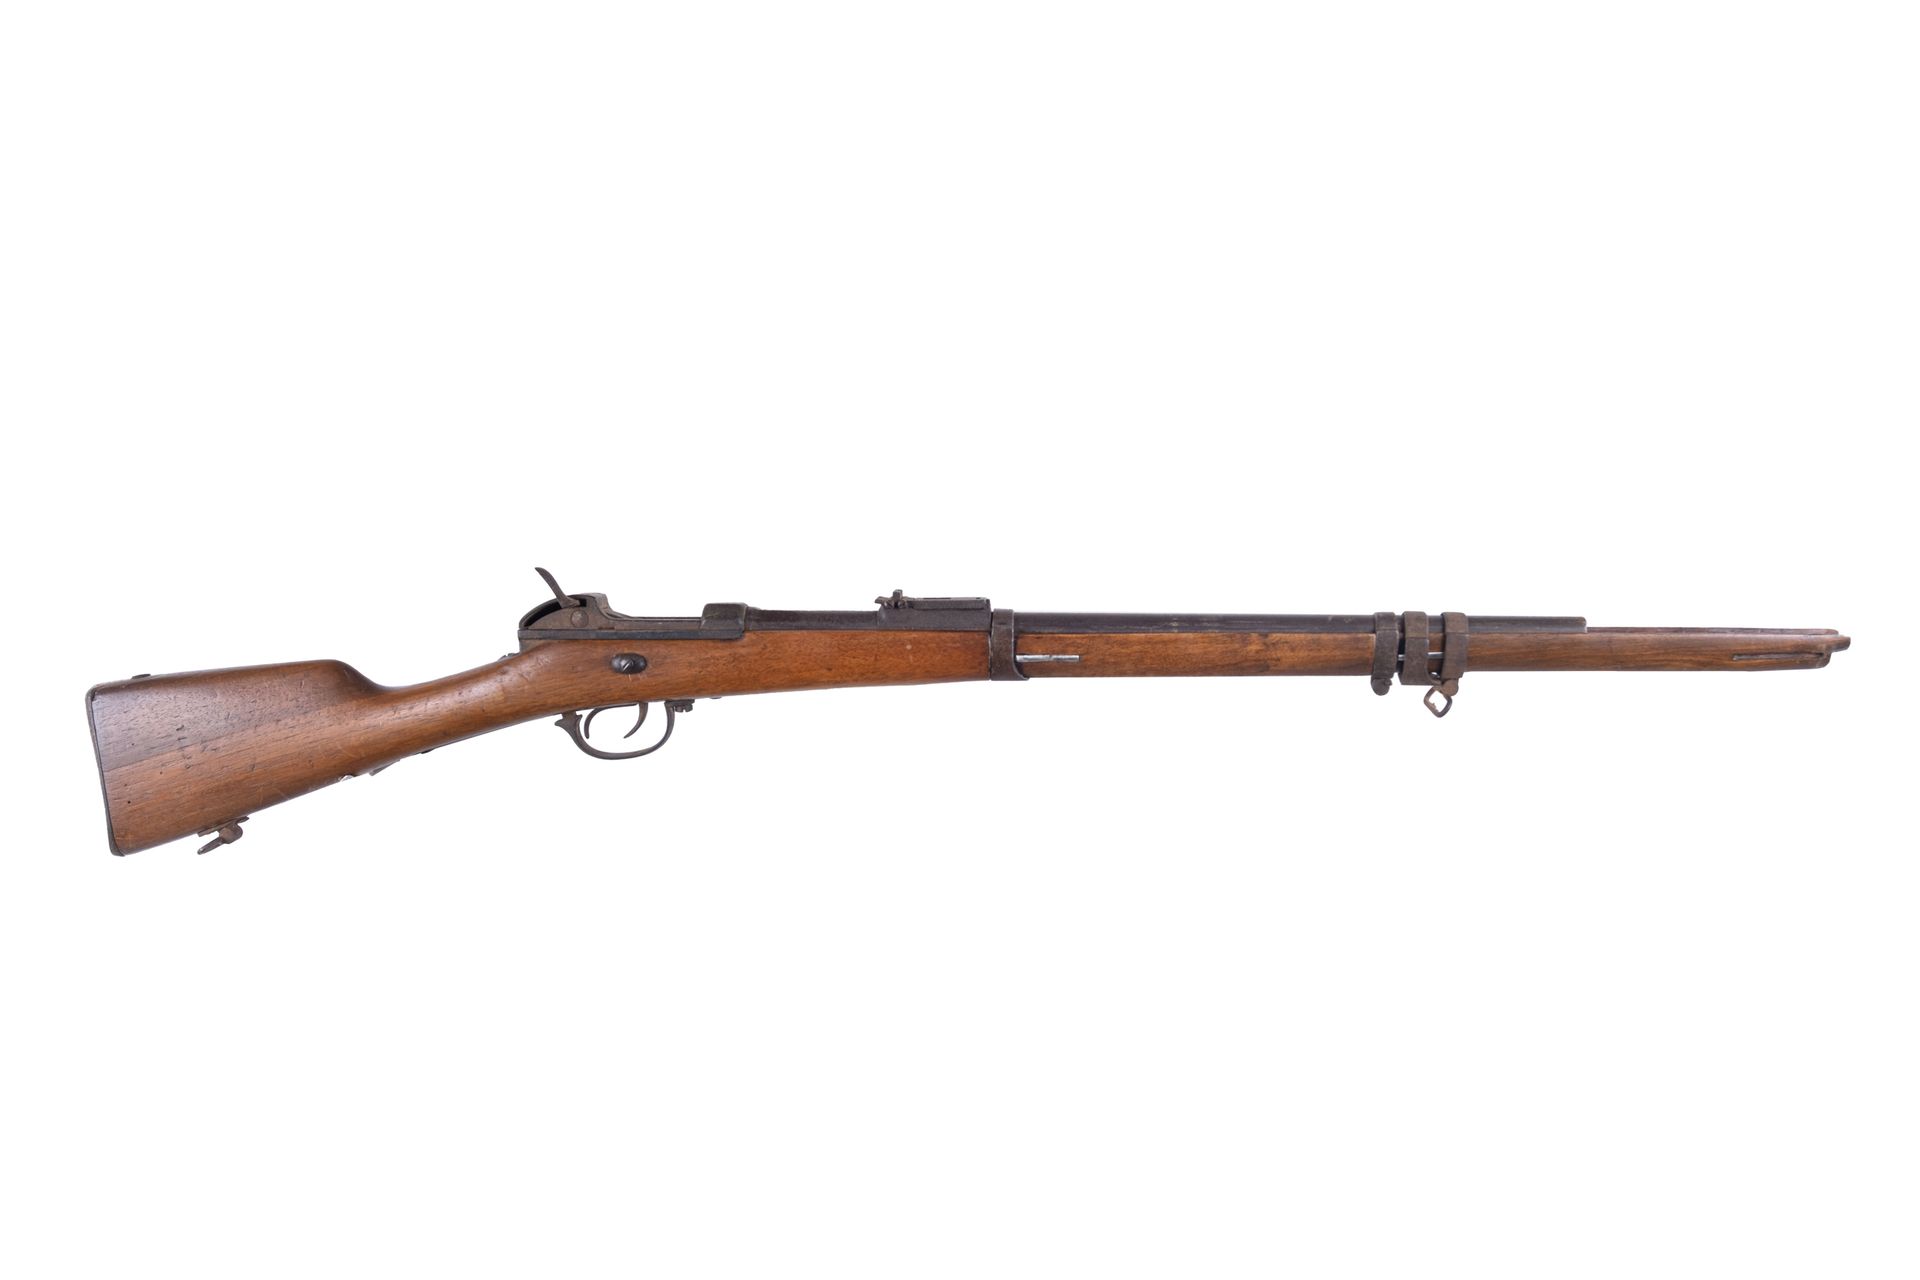 Null 巴伐利亚韦尔德步枪1869型。

处于状态（切割枪管，机械事故）。

附有皮革吊带的碎片。